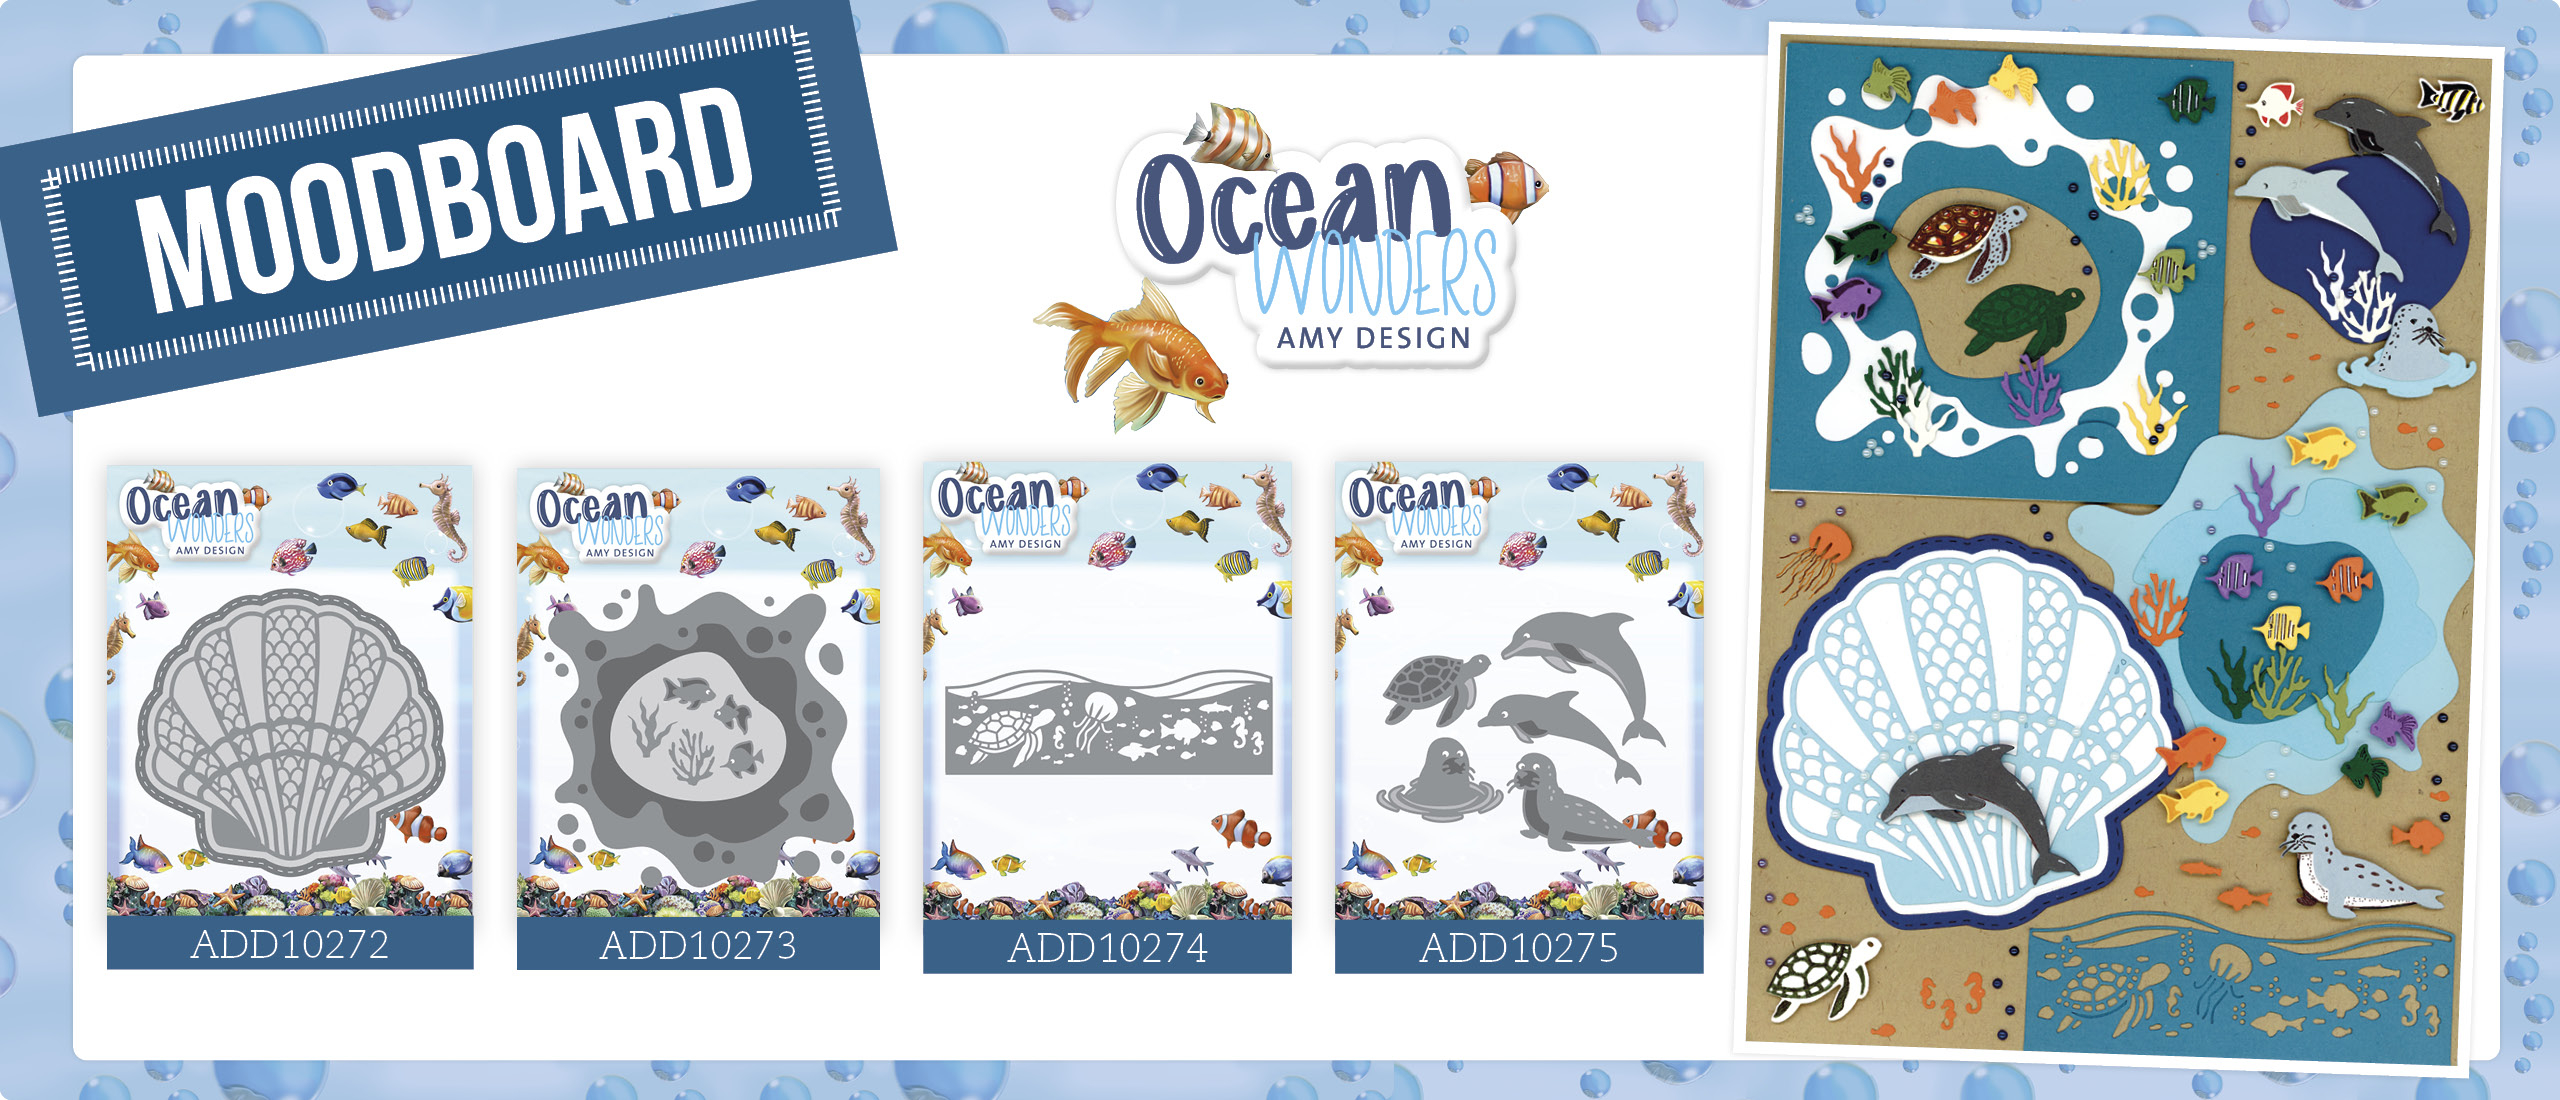 Gratis Moodboard Ocean Wonders van Amy Design